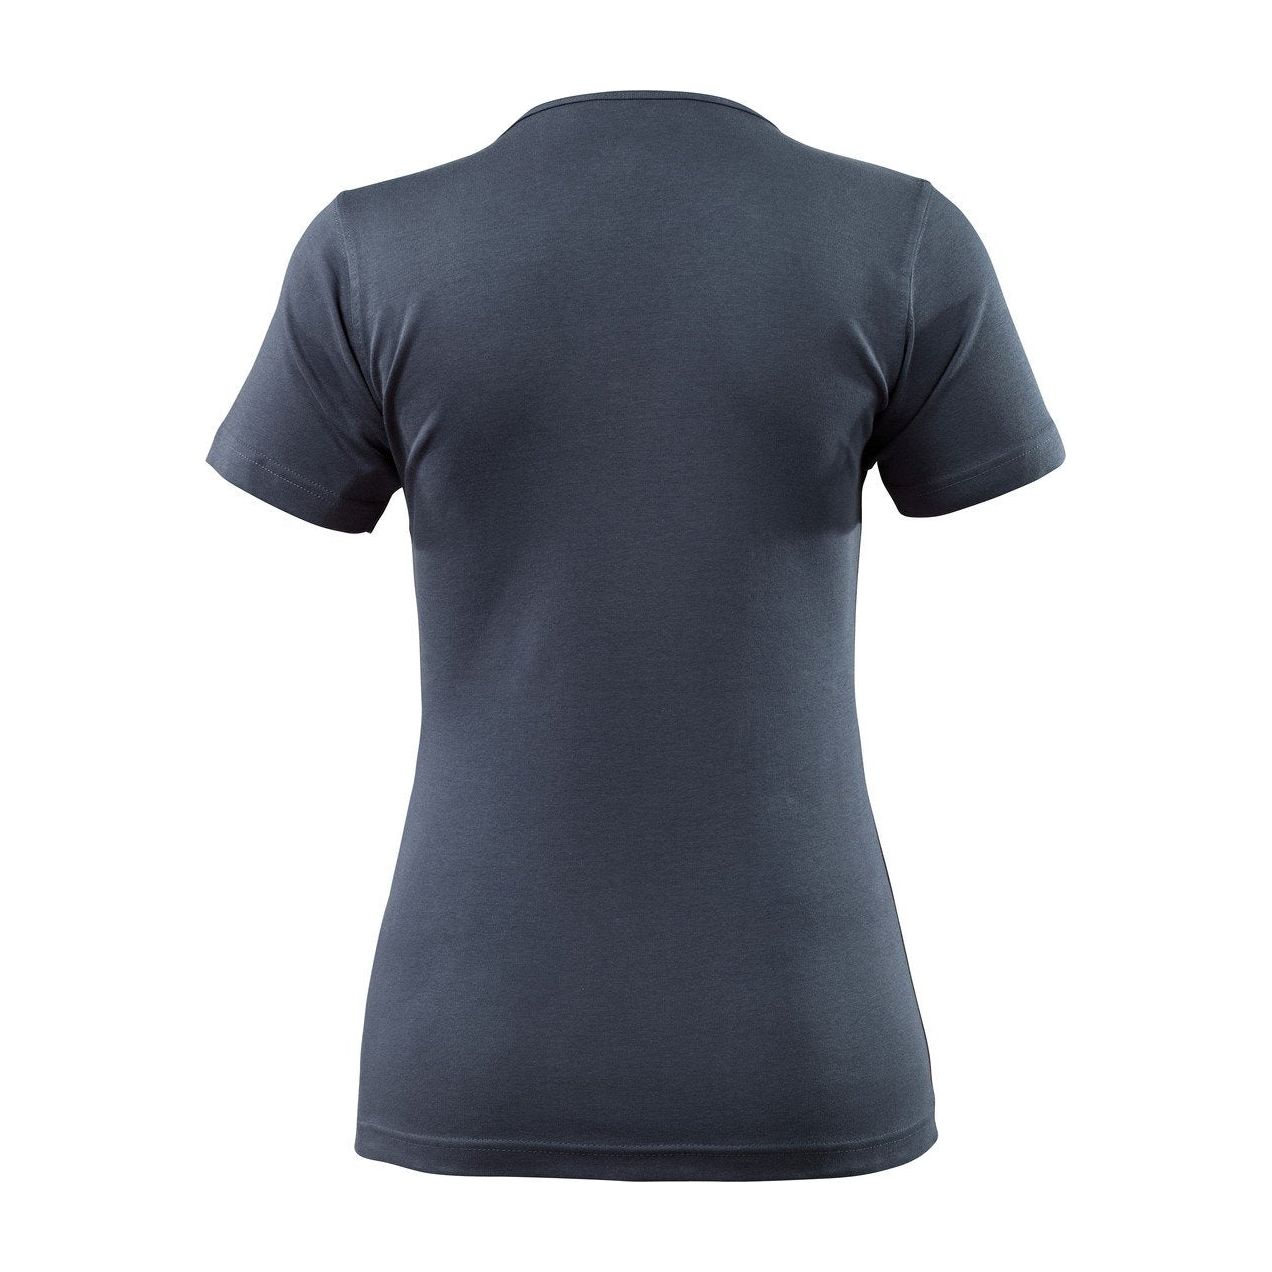 Mascot Arras T-shirt Round-Neck Azure Blue 51583-967-91 Front